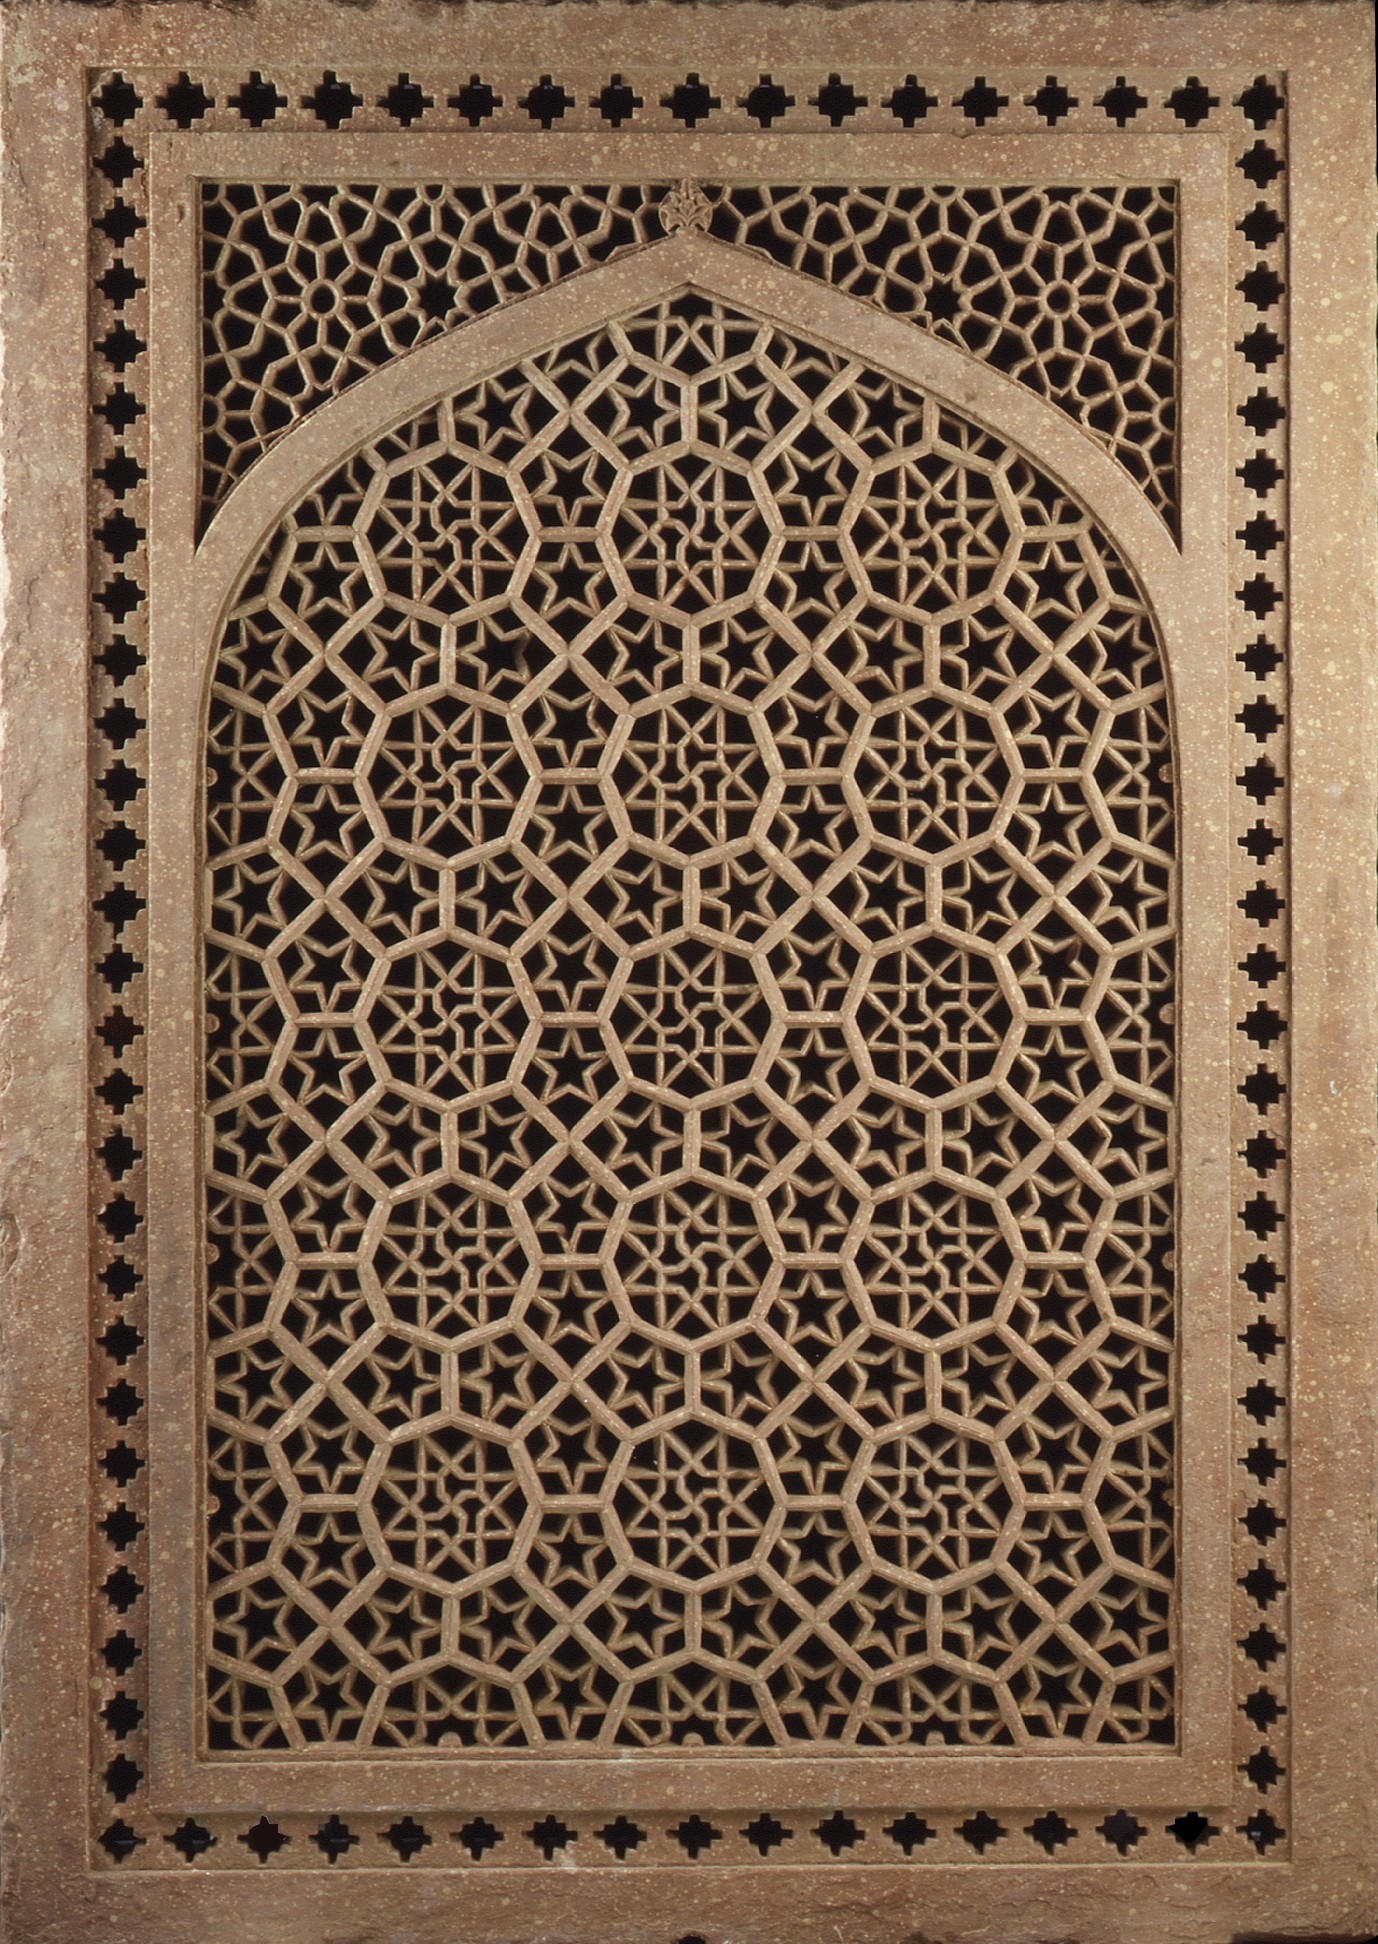 Lesson Plan: Geometric Design in Islamic Art